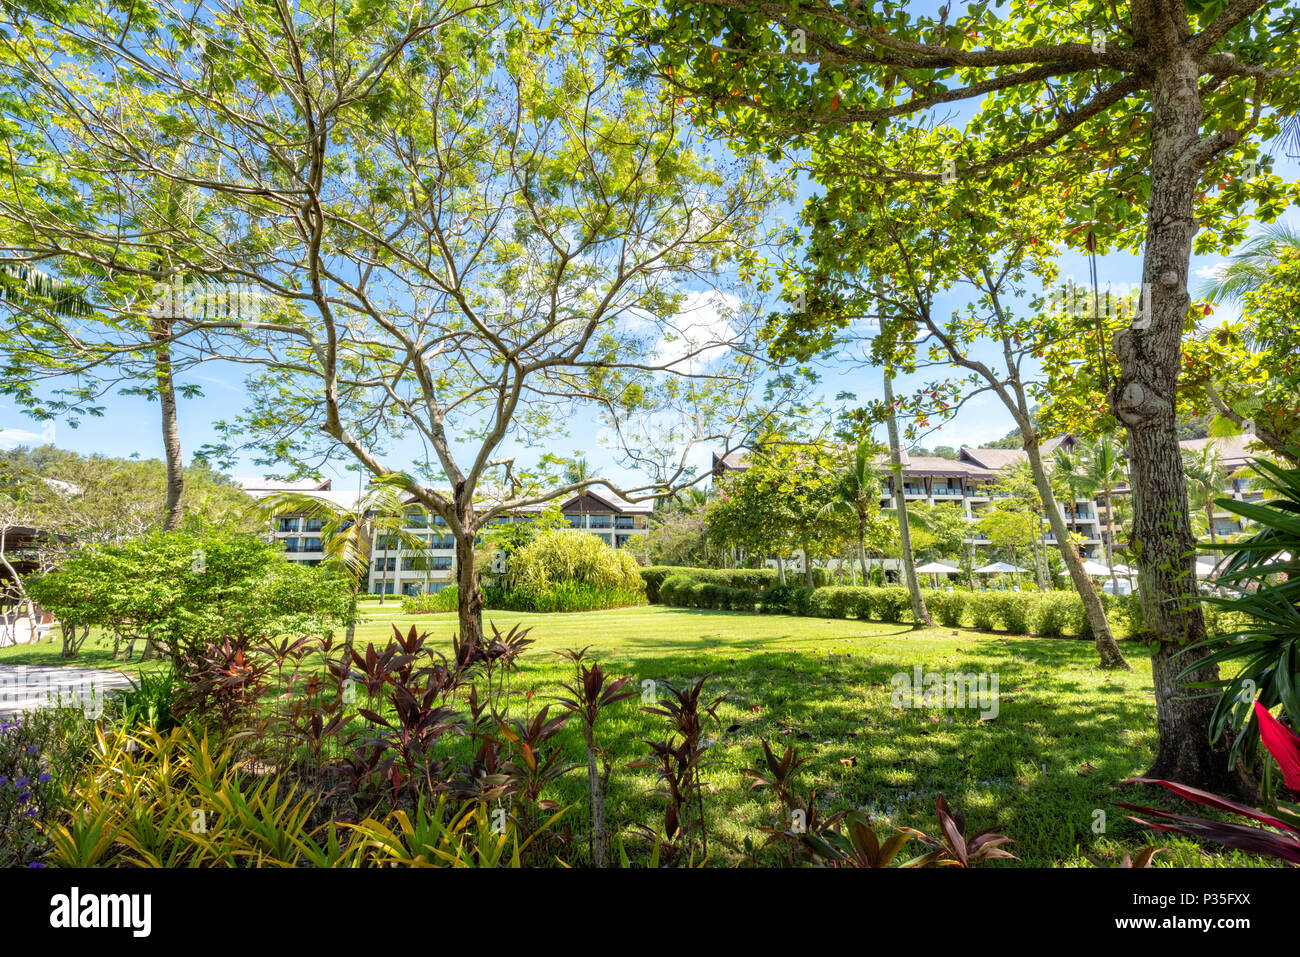 The lush grounds of the Shangri La Rasa Ria Hotel and Resort in Kota Kinabalu, Borneo, Malaysia Stock Photo